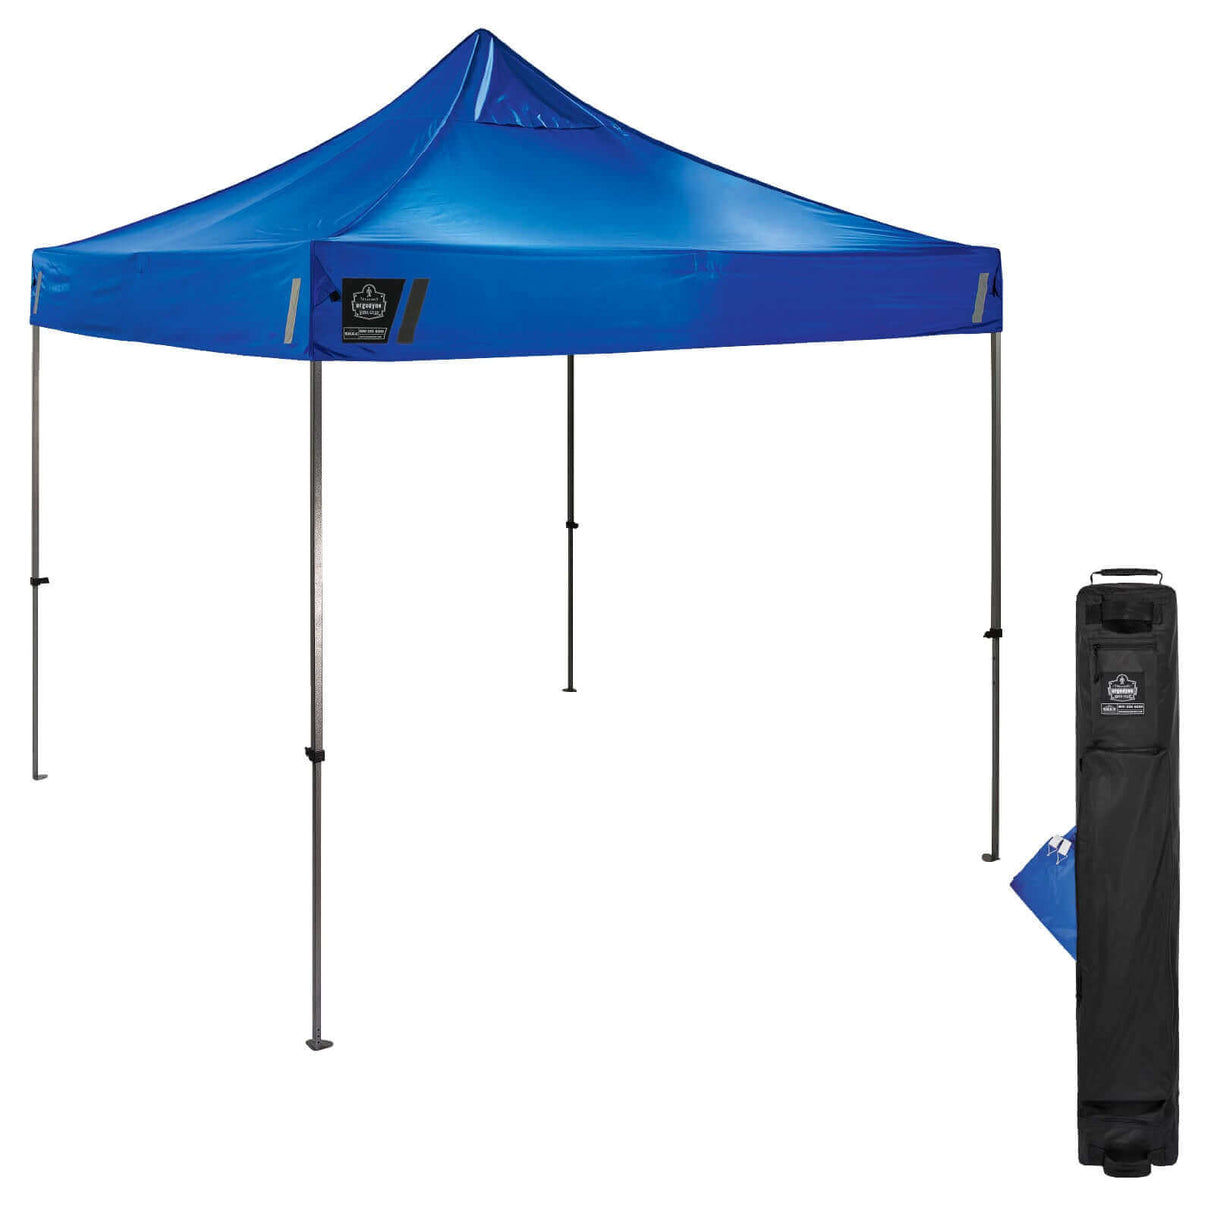 Ergodyne SHAX 6000 Heavy-Duty Pop-Up Tent, 10ft x 10ft